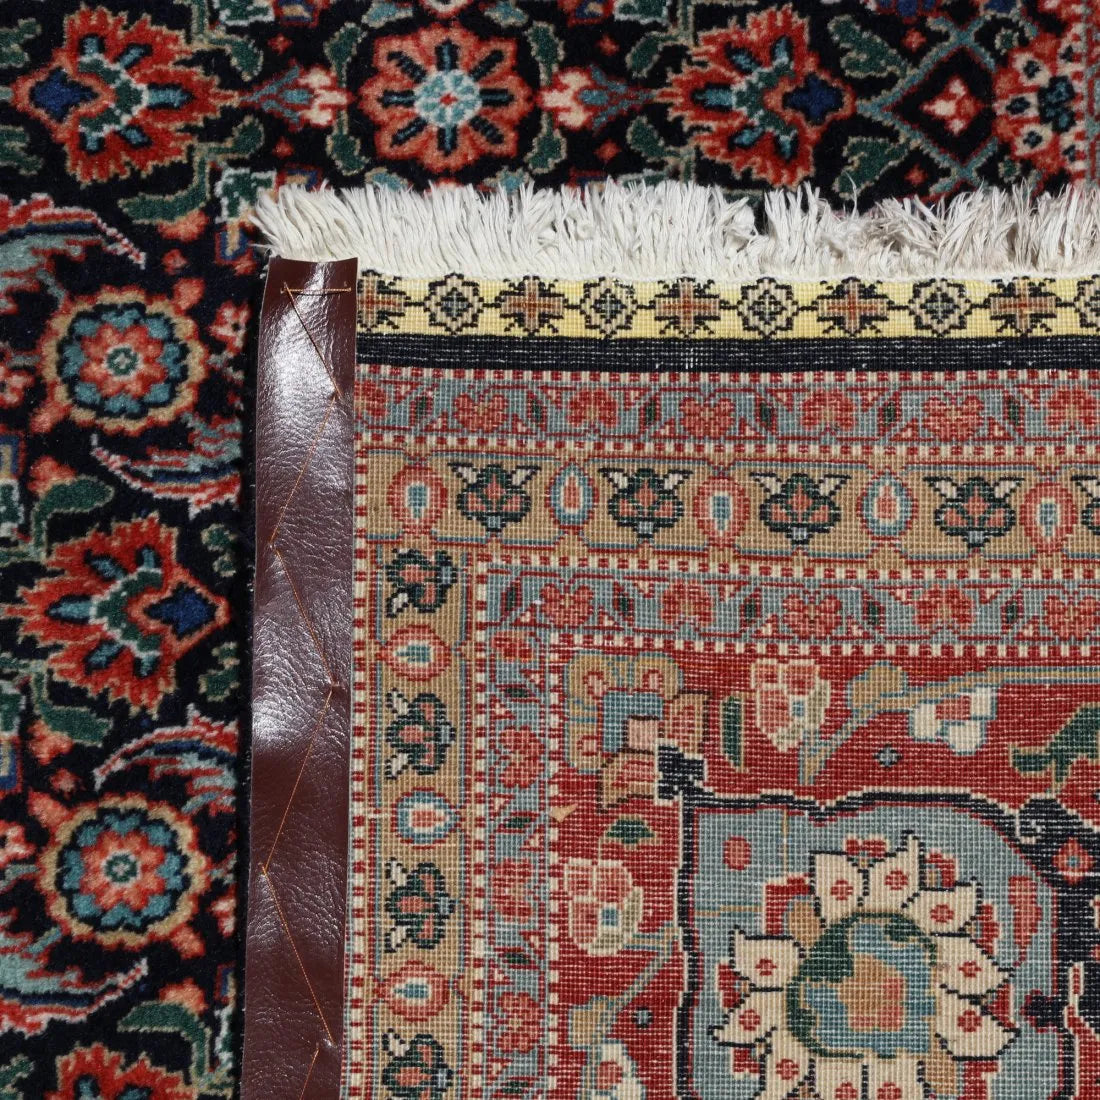 OR6-010: Late 20th Century Persian Malayer Wool Rug